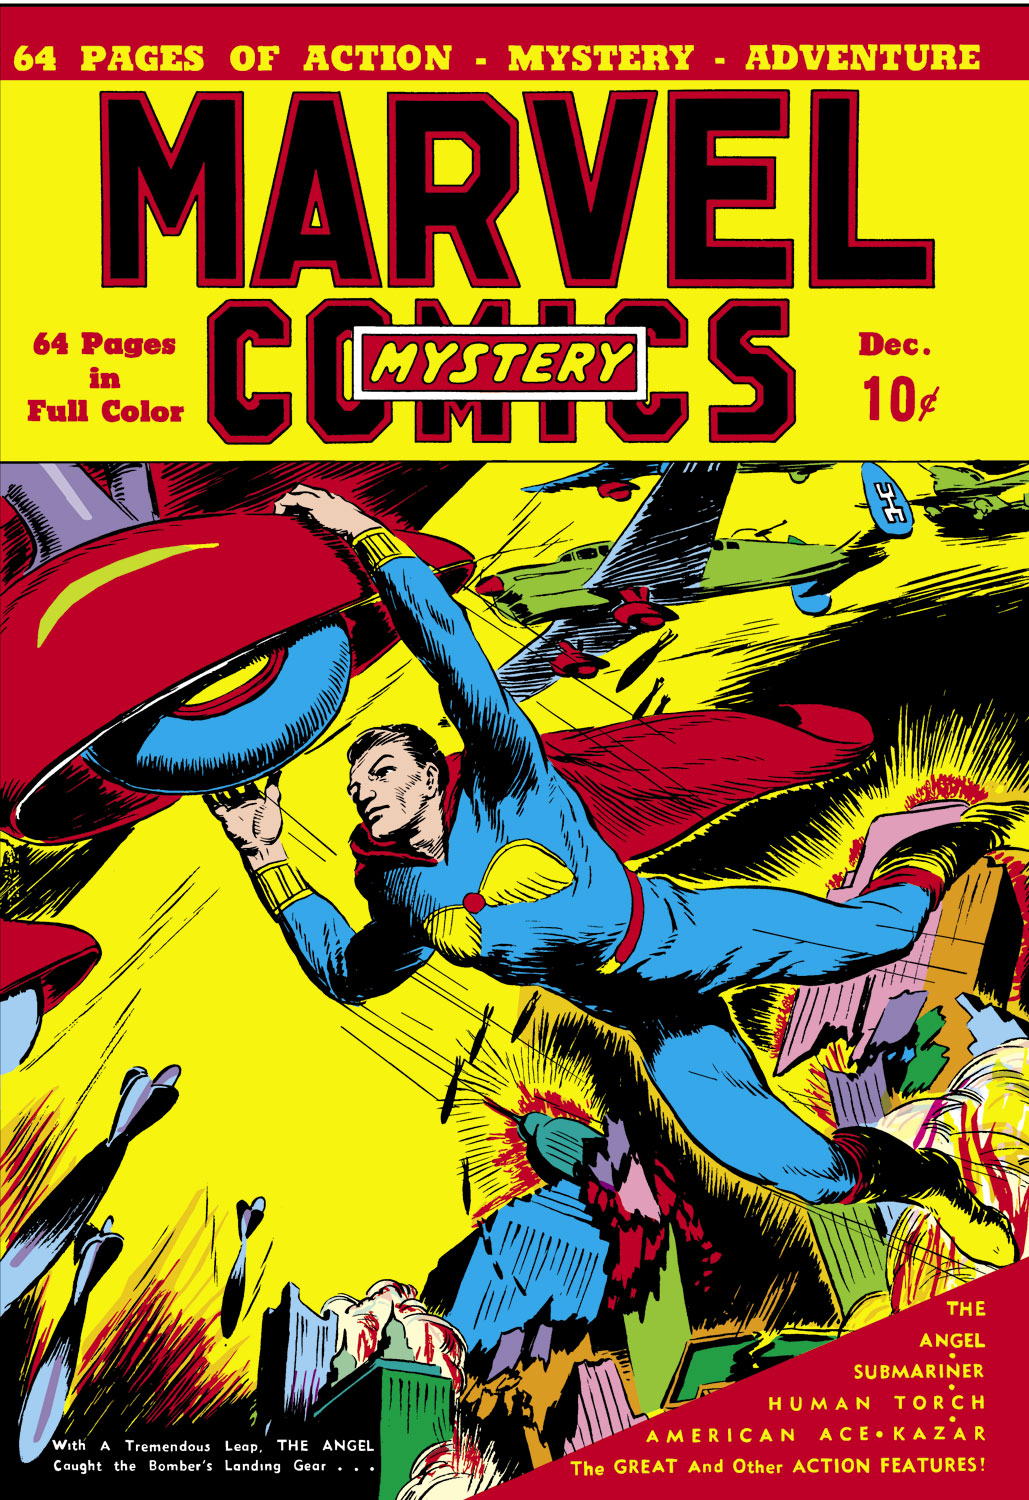 Marvel Mystery Comics (1939) #2